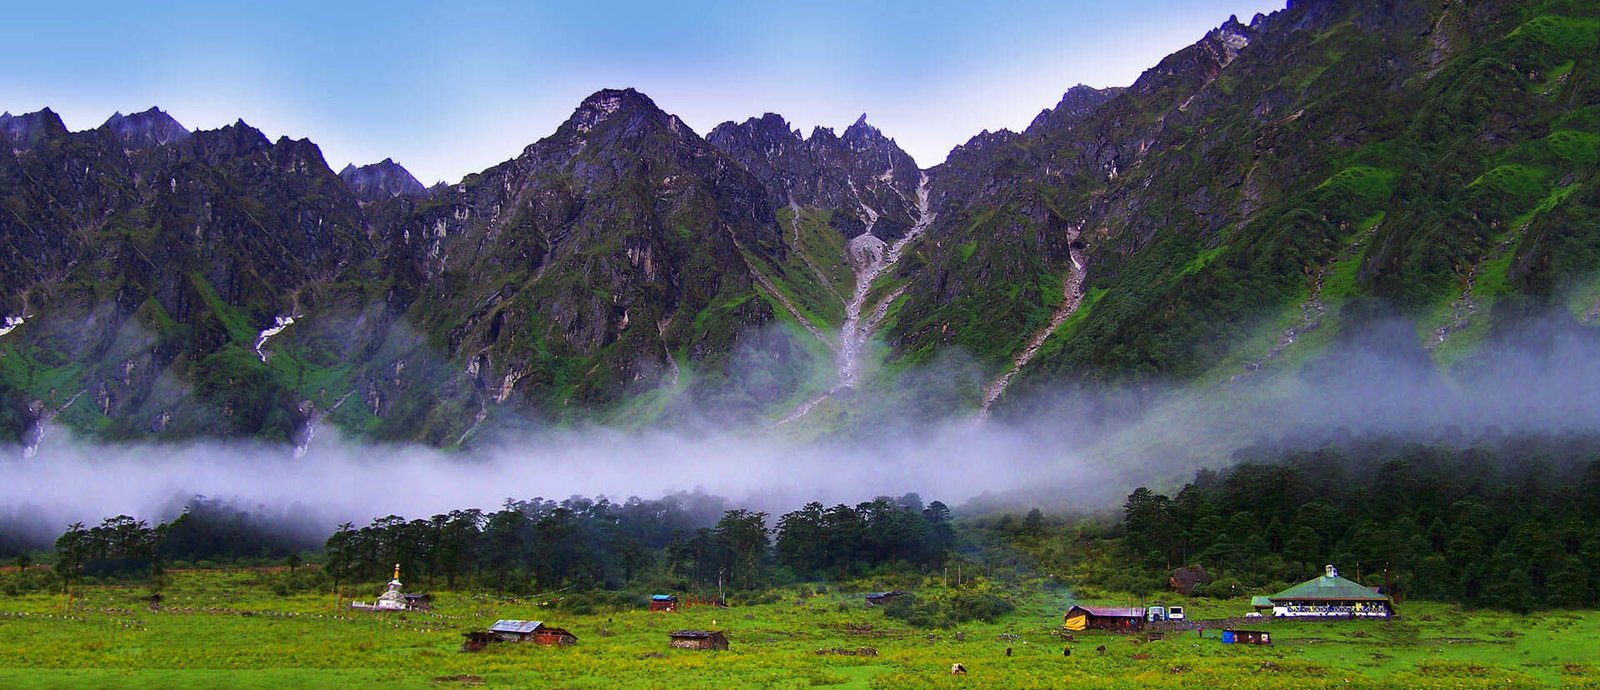 Sikkim land of Astounding Natural Scenery Honeymoon Package